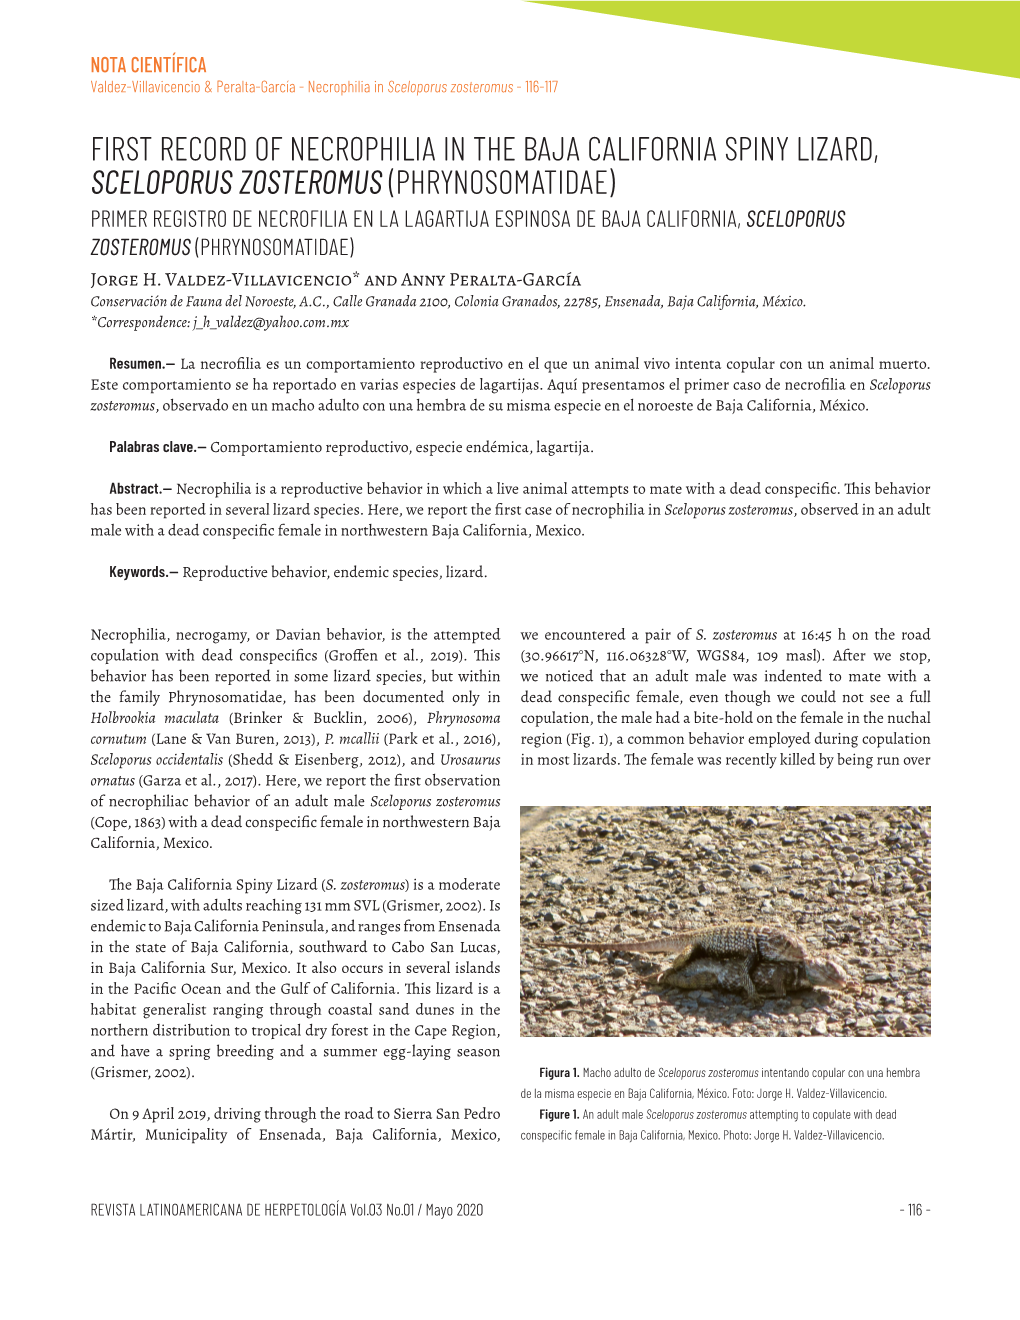 First Record of Necrophilia in the Baja California Spiny Lizard, Sceloporus